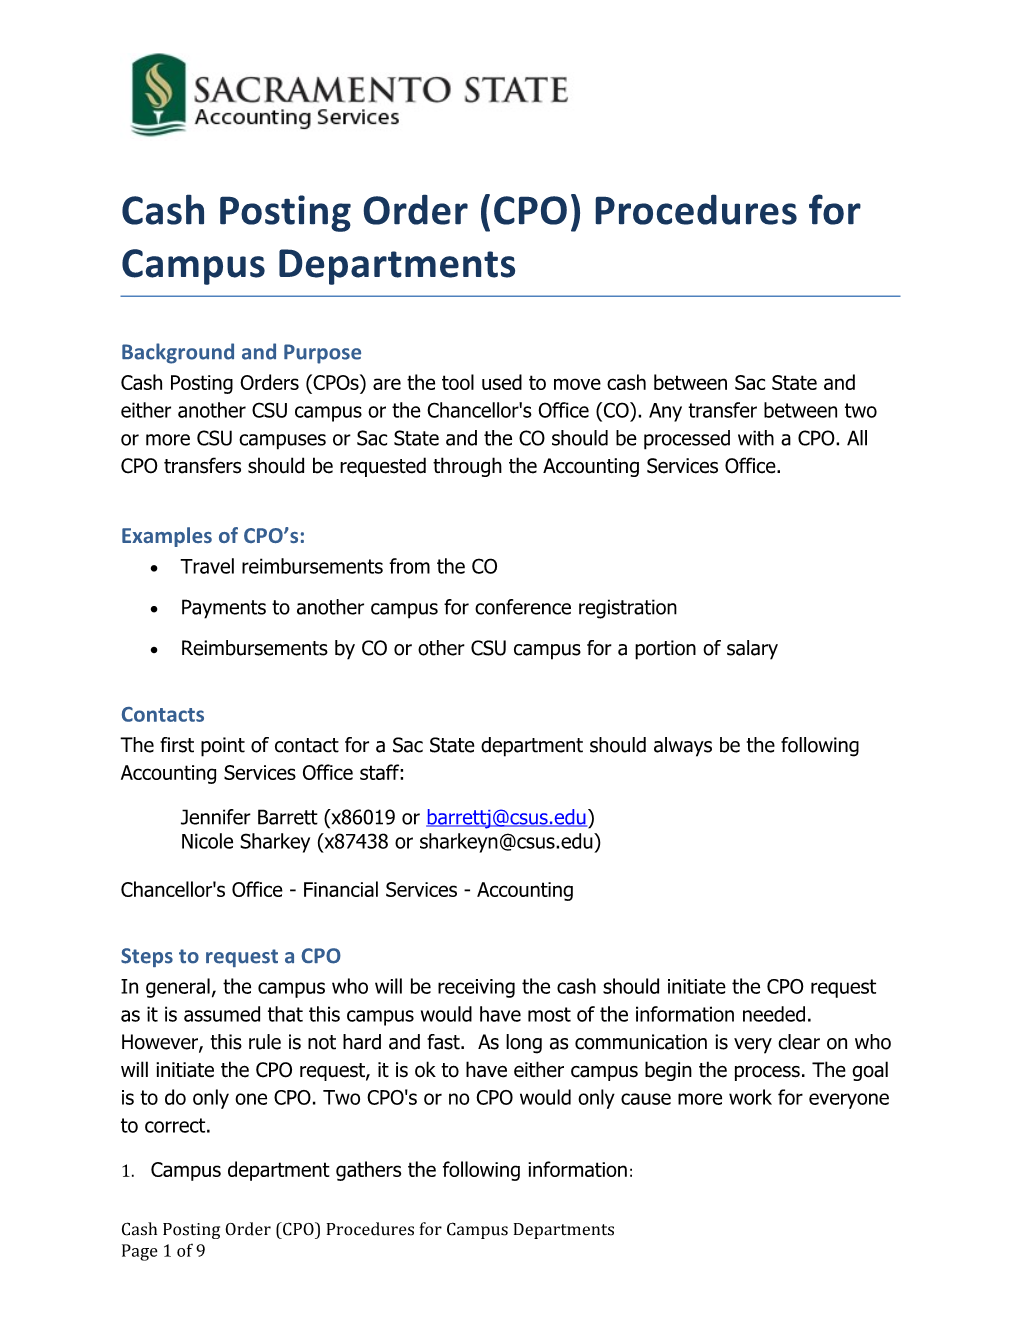 Cash Posting Order (CPO) Procedures for Campus Departments